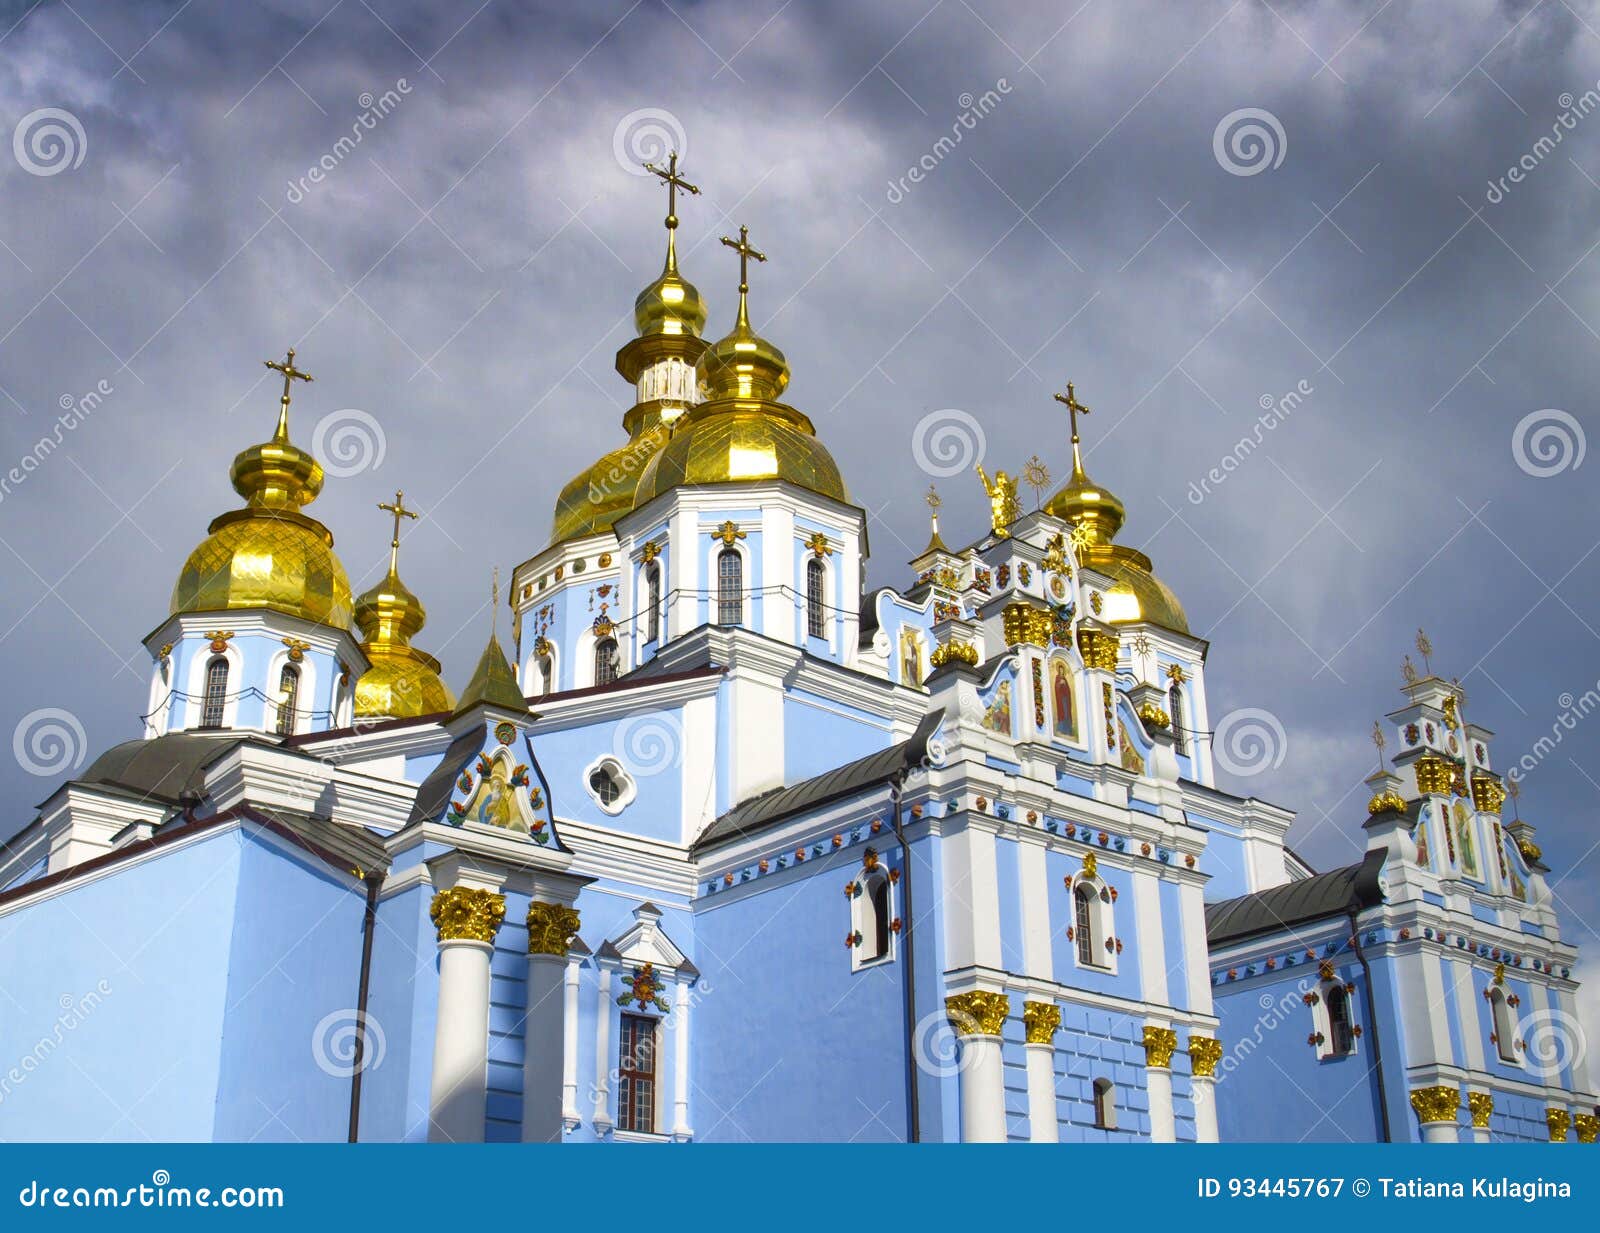 mikhaylovsky monastery. kiev. ukraine